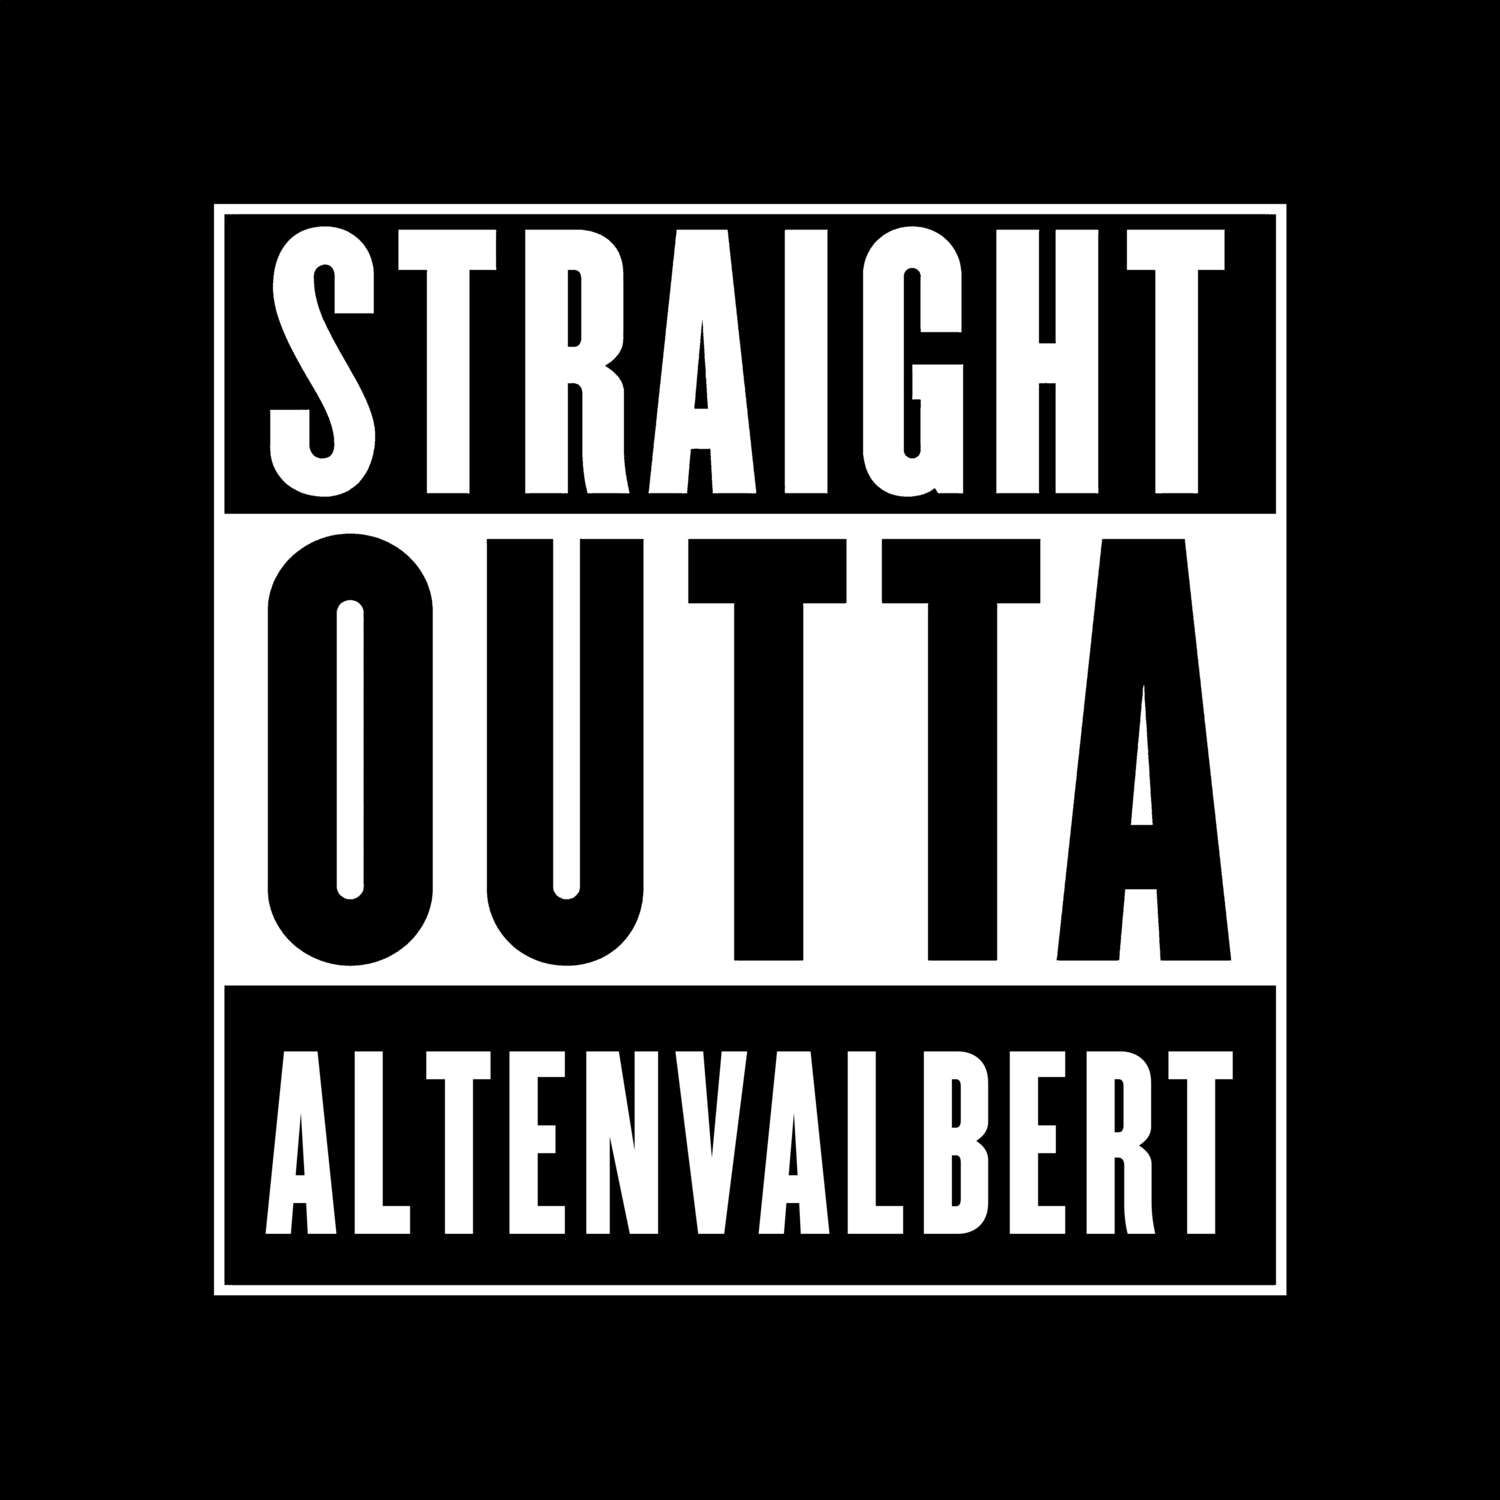 Altenvalbert T-Shirt »Straight Outta«